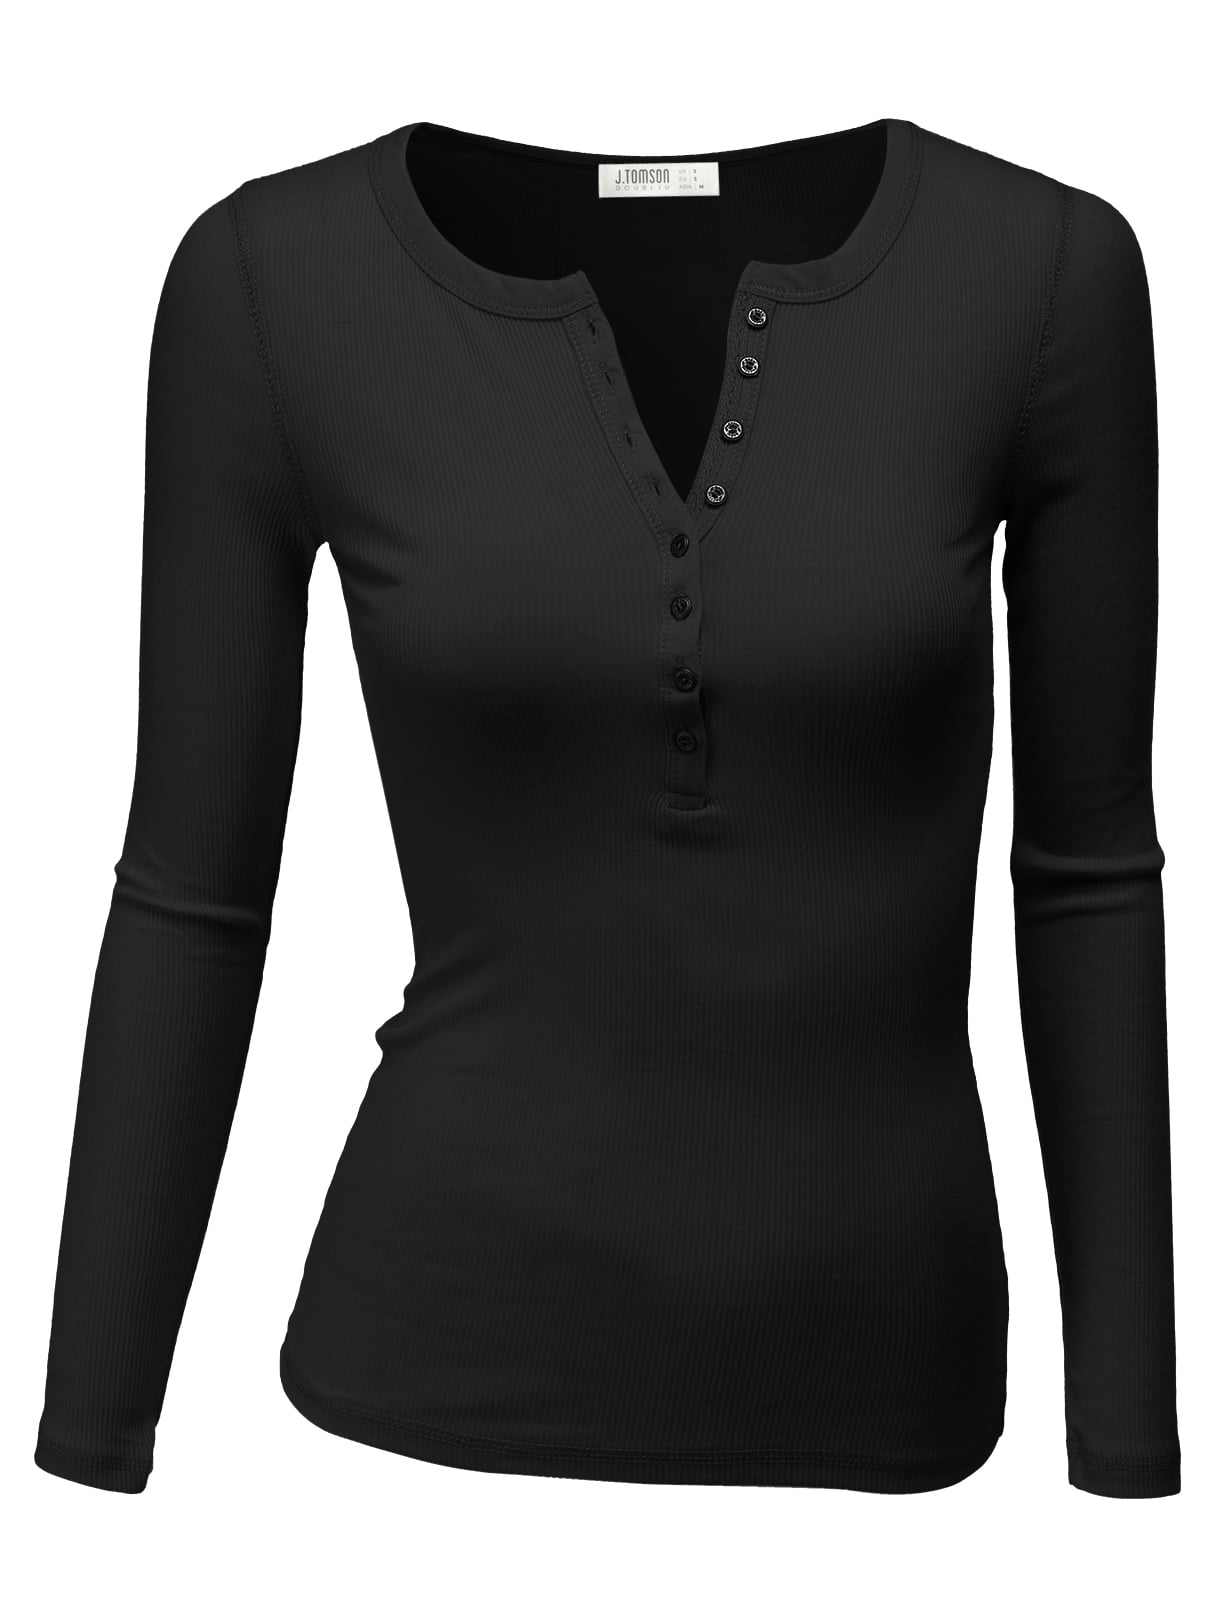 Doublju - Doublju Women's Womens Long Sleeve Henley Shirts Round Neck